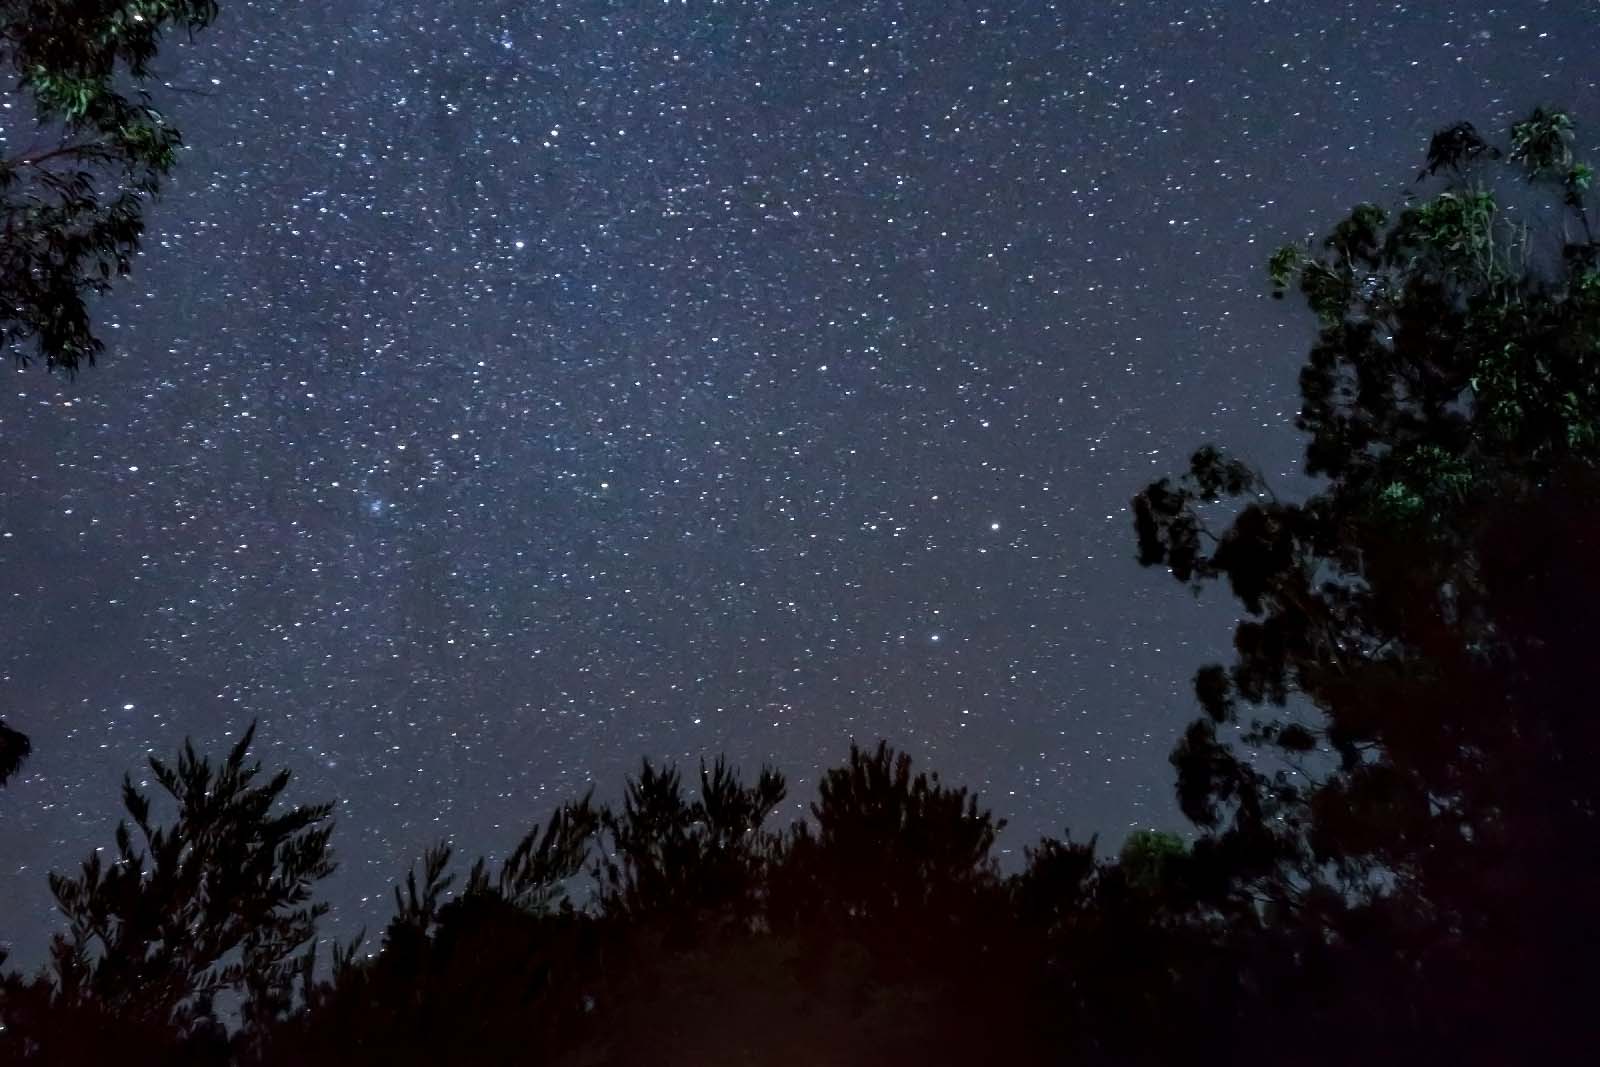 Nighttime sky showing stars between trees